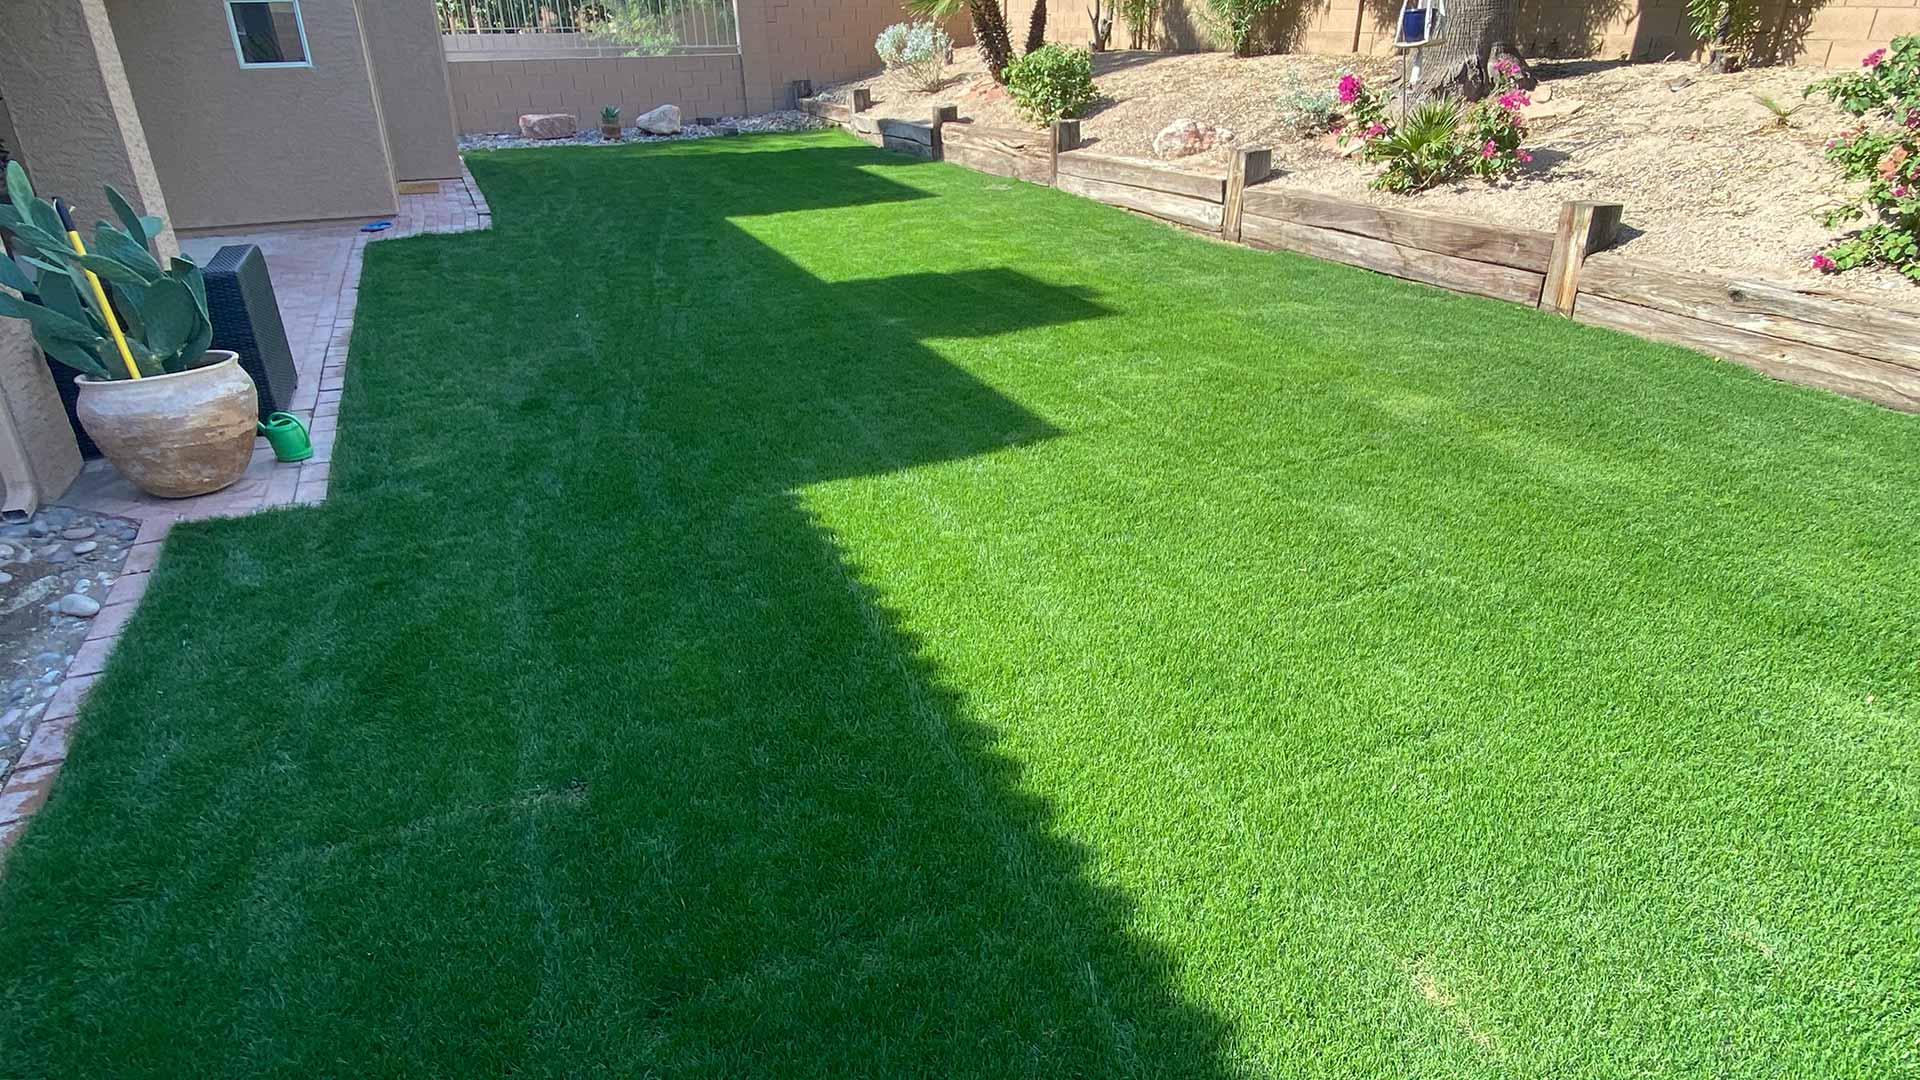 Lush, green sod installation in a yard near Paradise Valley, Arizona.